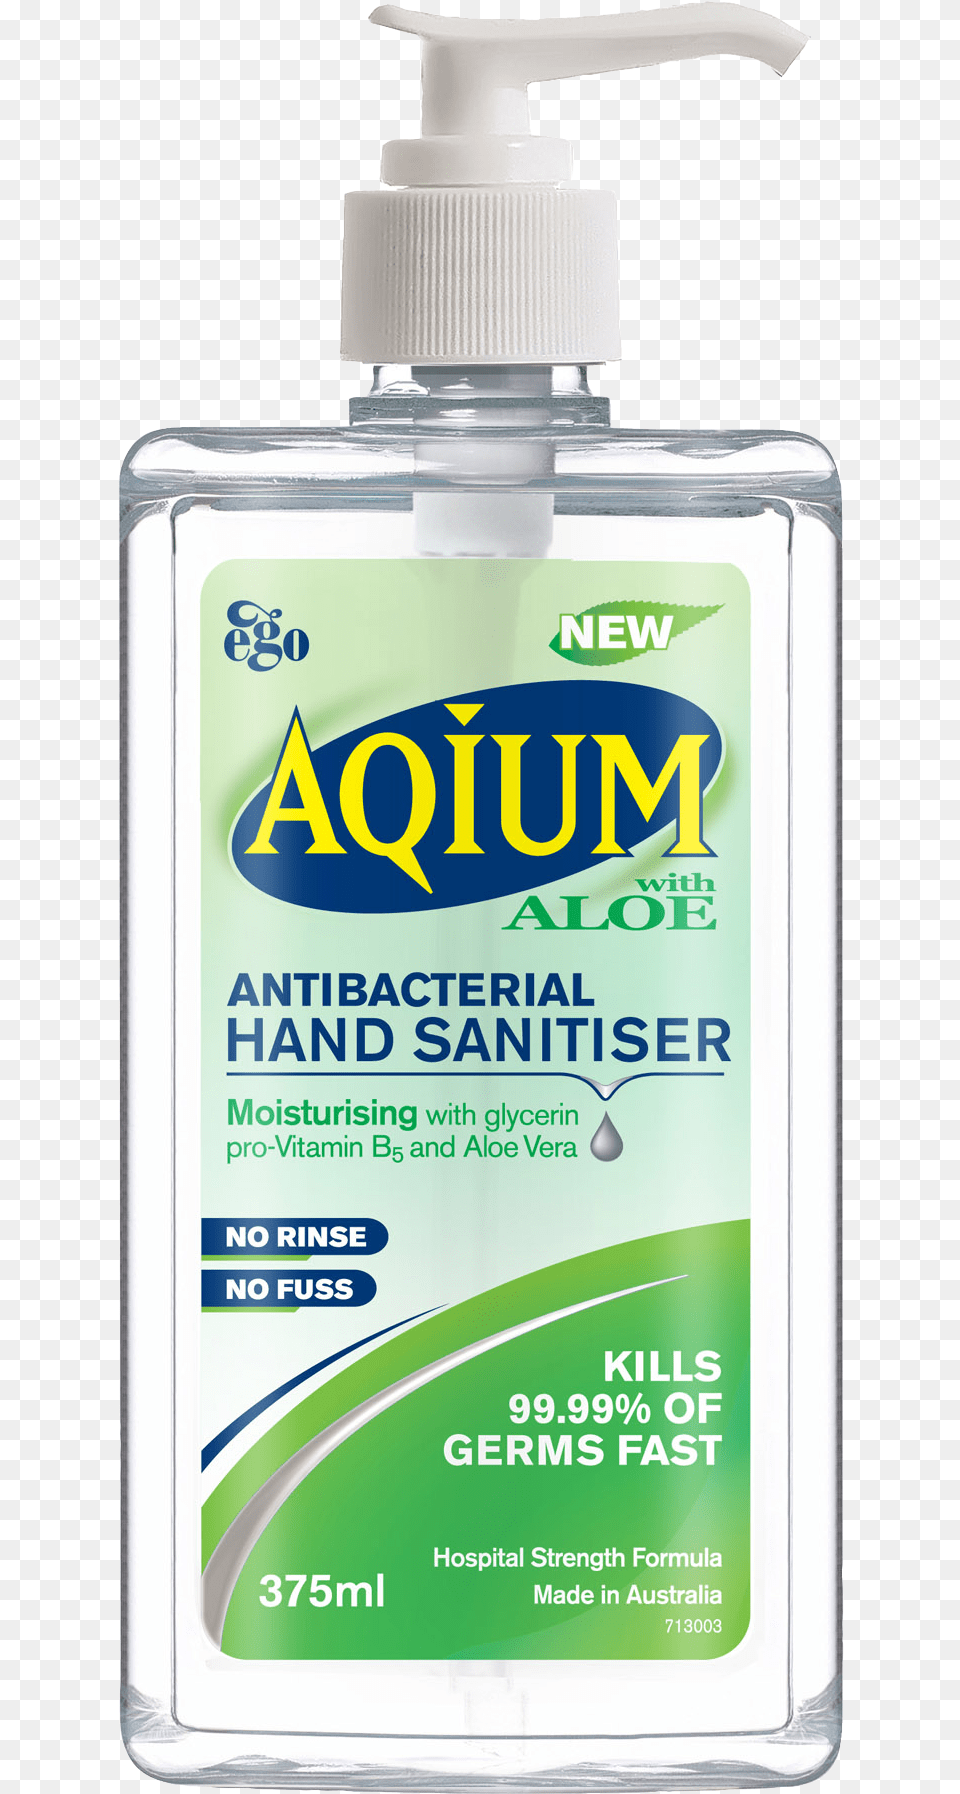 Aqium Hand Sanitiser, Bottle, Lotion, Cosmetics, Perfume Png Image